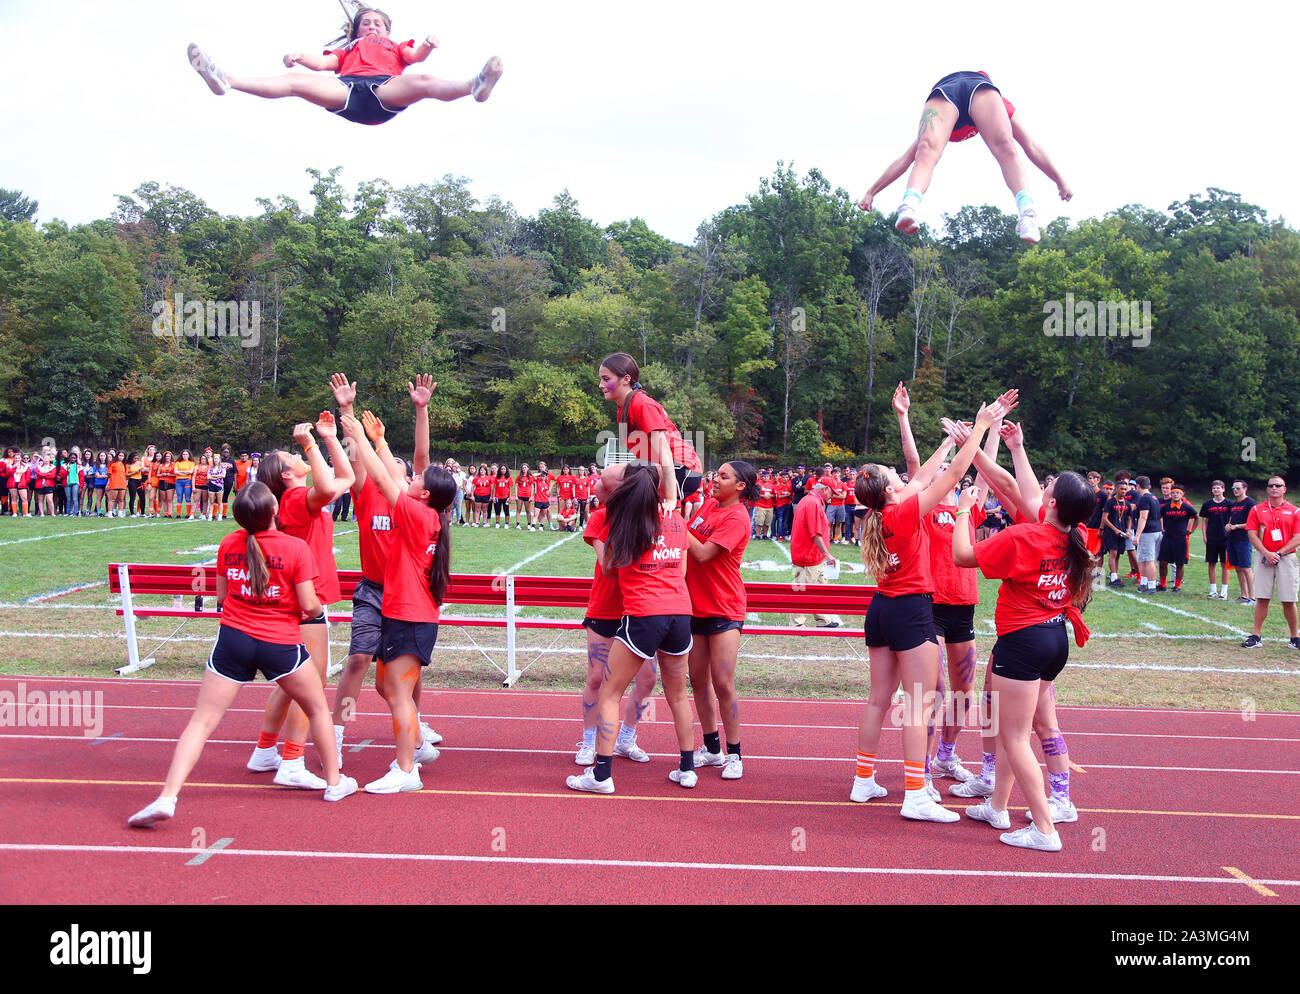 Cheerleaders at a high school football game Stock Photo